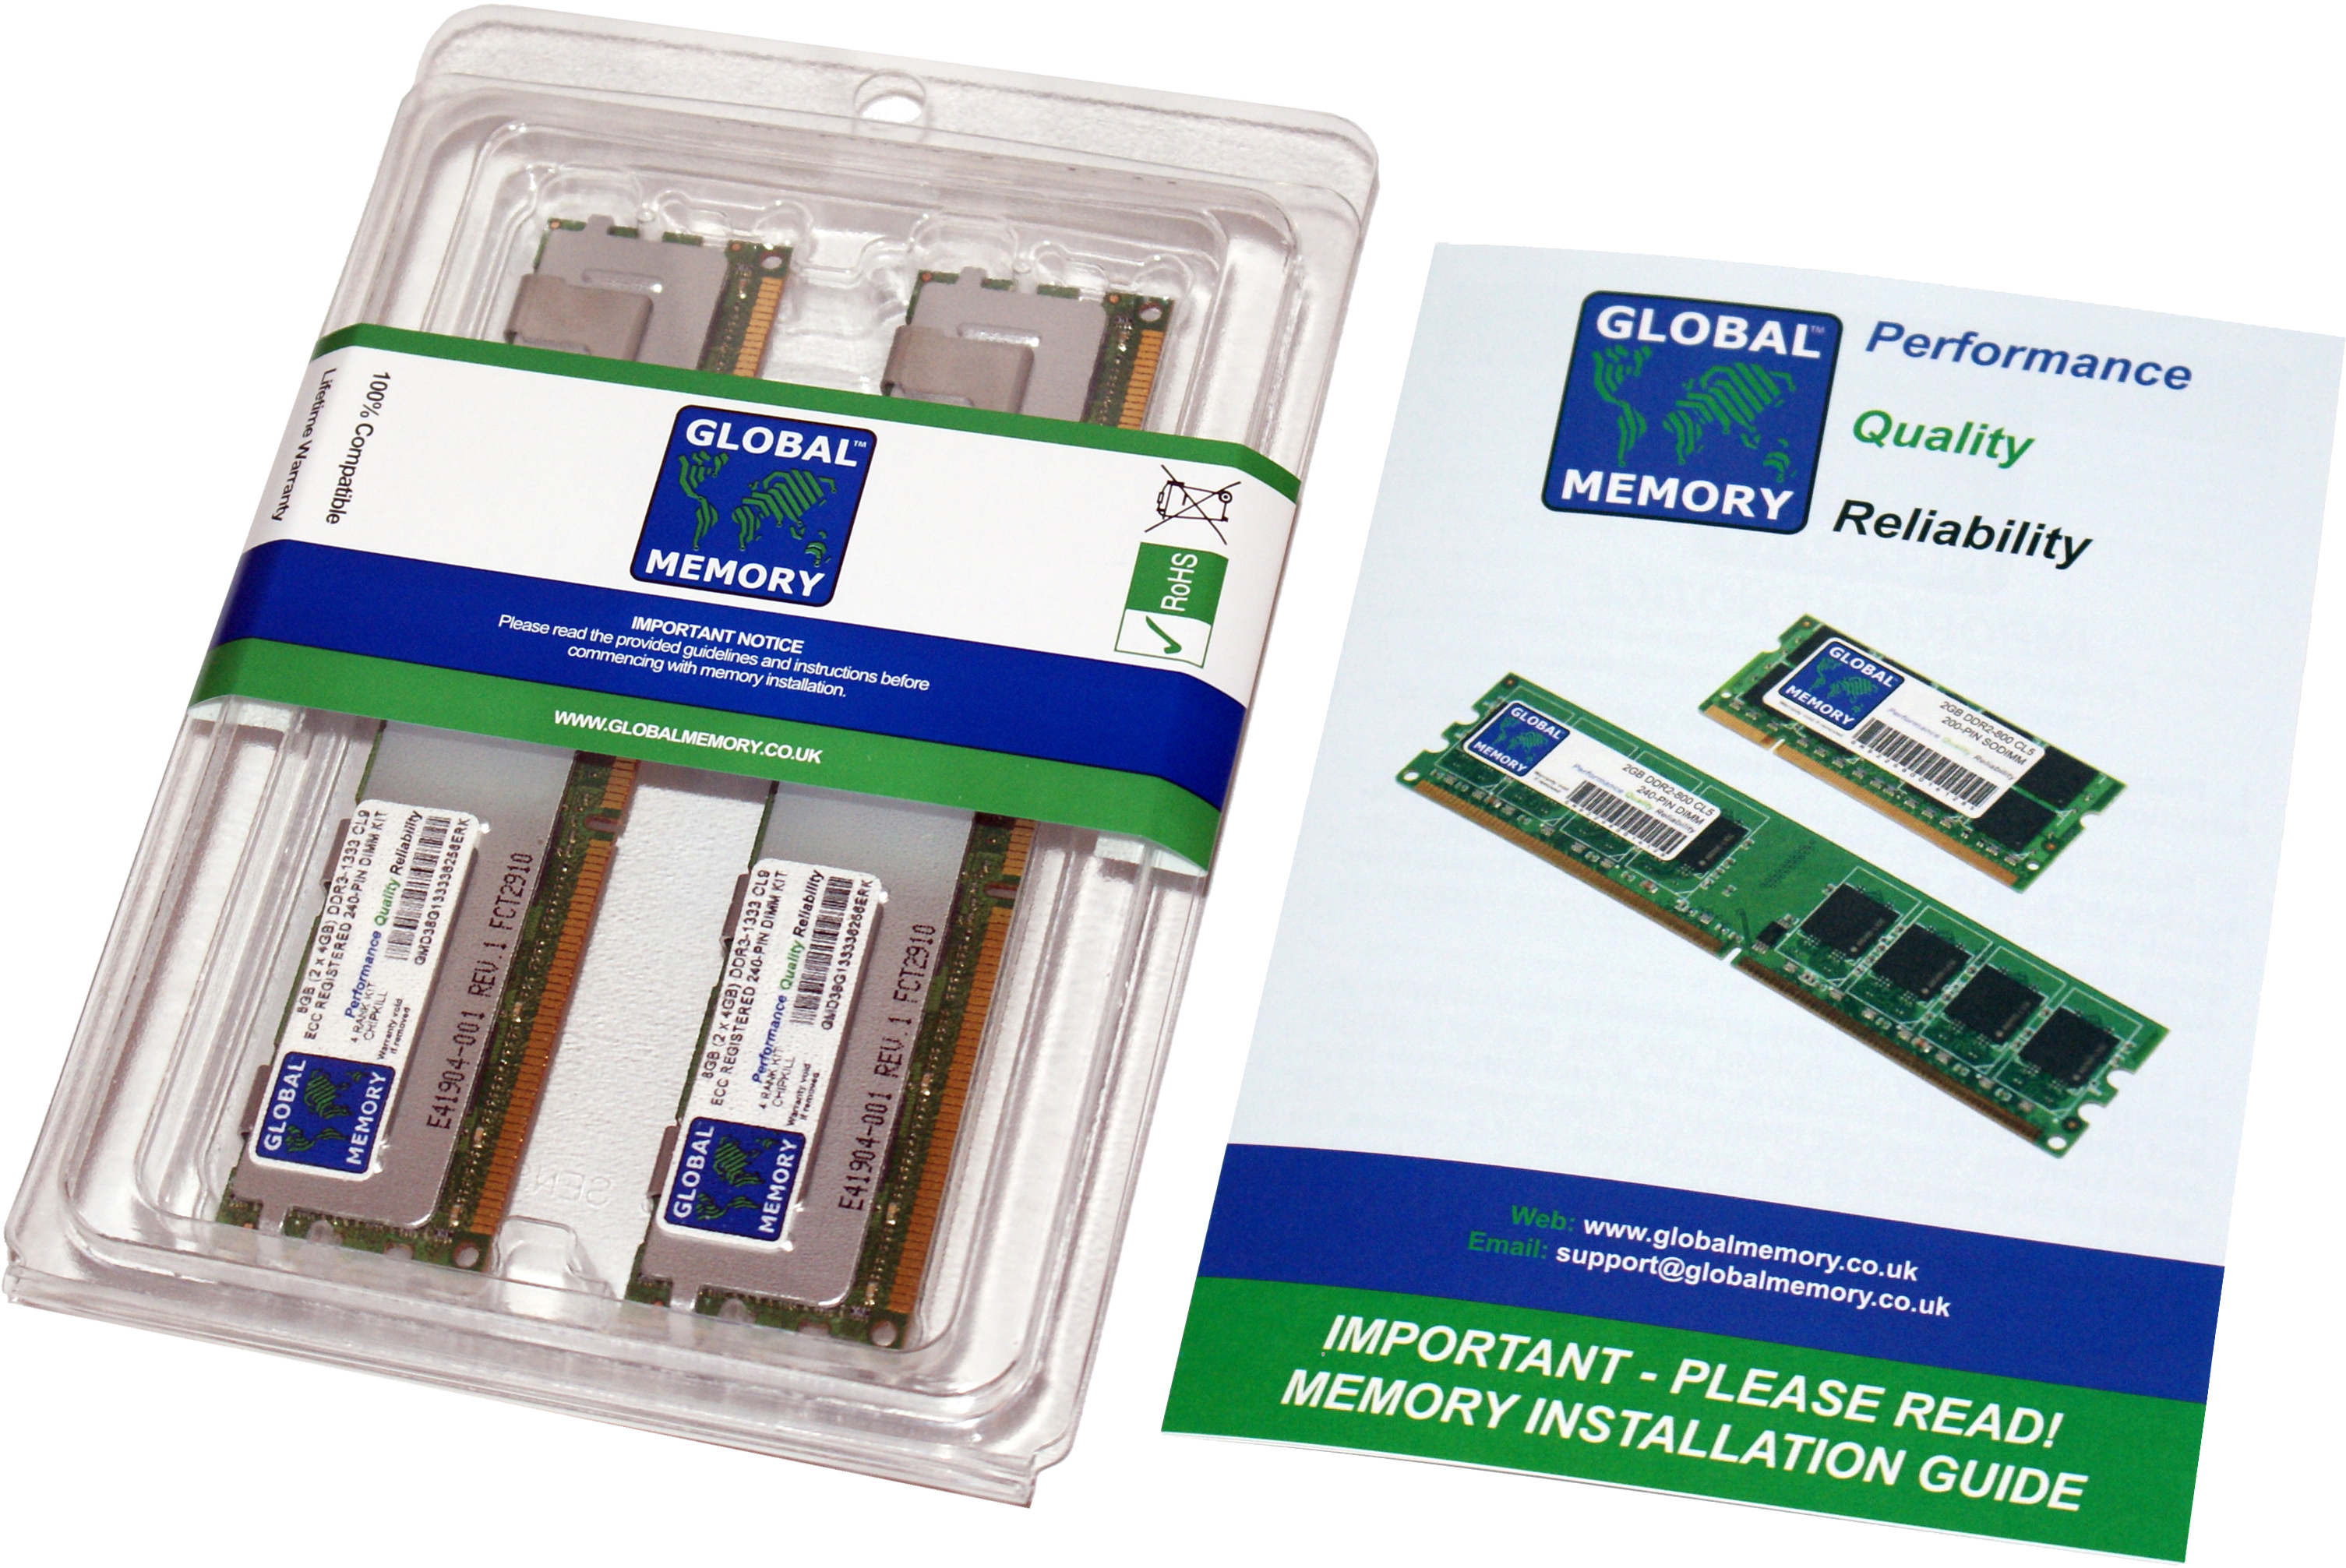 32GB (2 x 16GB) DDR3 1066MHz PC3-8500 240-PIN ECC REGISTERED DIMM (RDIMM) MEMORY RAM KIT FOR ACER SERVERS/WORKSTATIONS (8 RANK KIT NON-CHIPKILL)